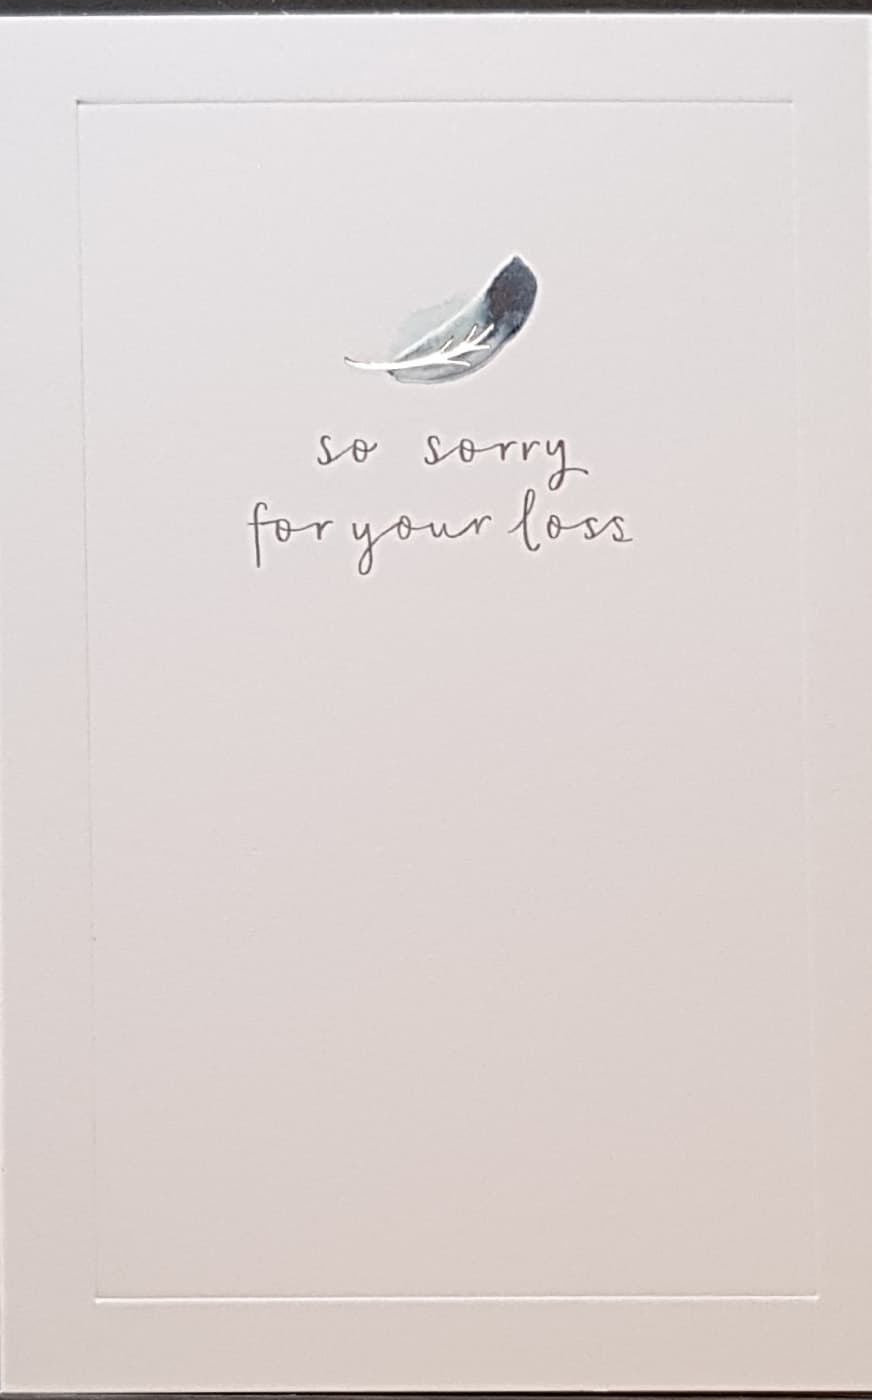 Sympathy Card - Single Black & A White Feather